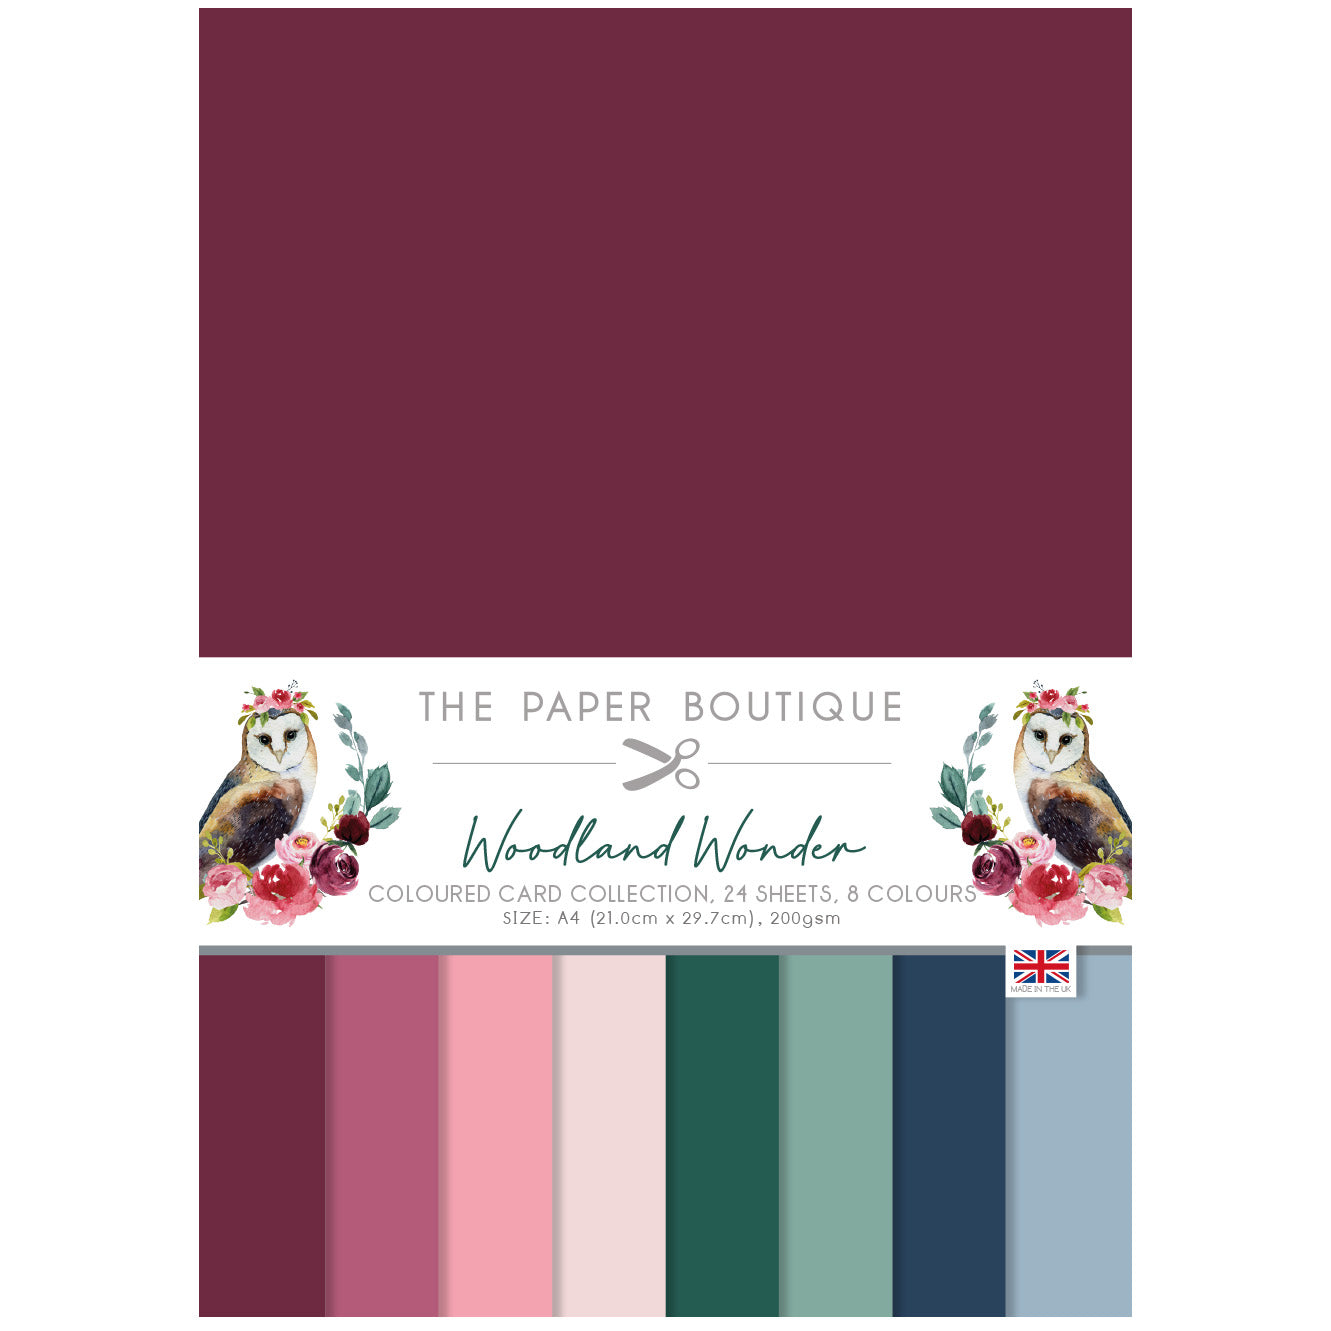 The Paper Boutique Woodland Wonder Colour Card Collection